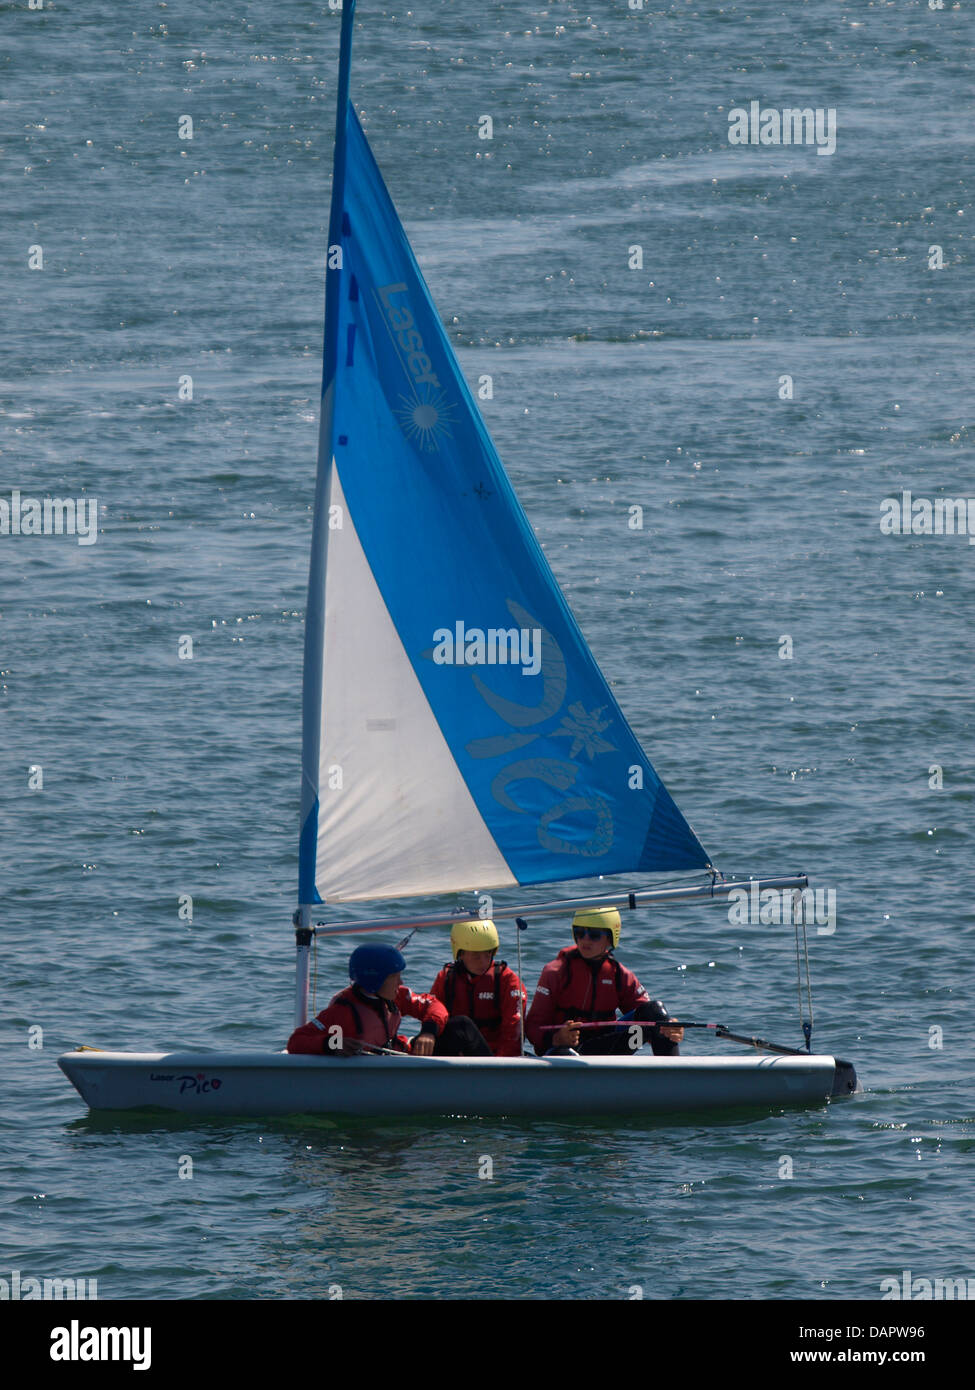 Tre bambini vela un Laser Pico yacht, Plymouth UK 2013 Foto stock - Alamy